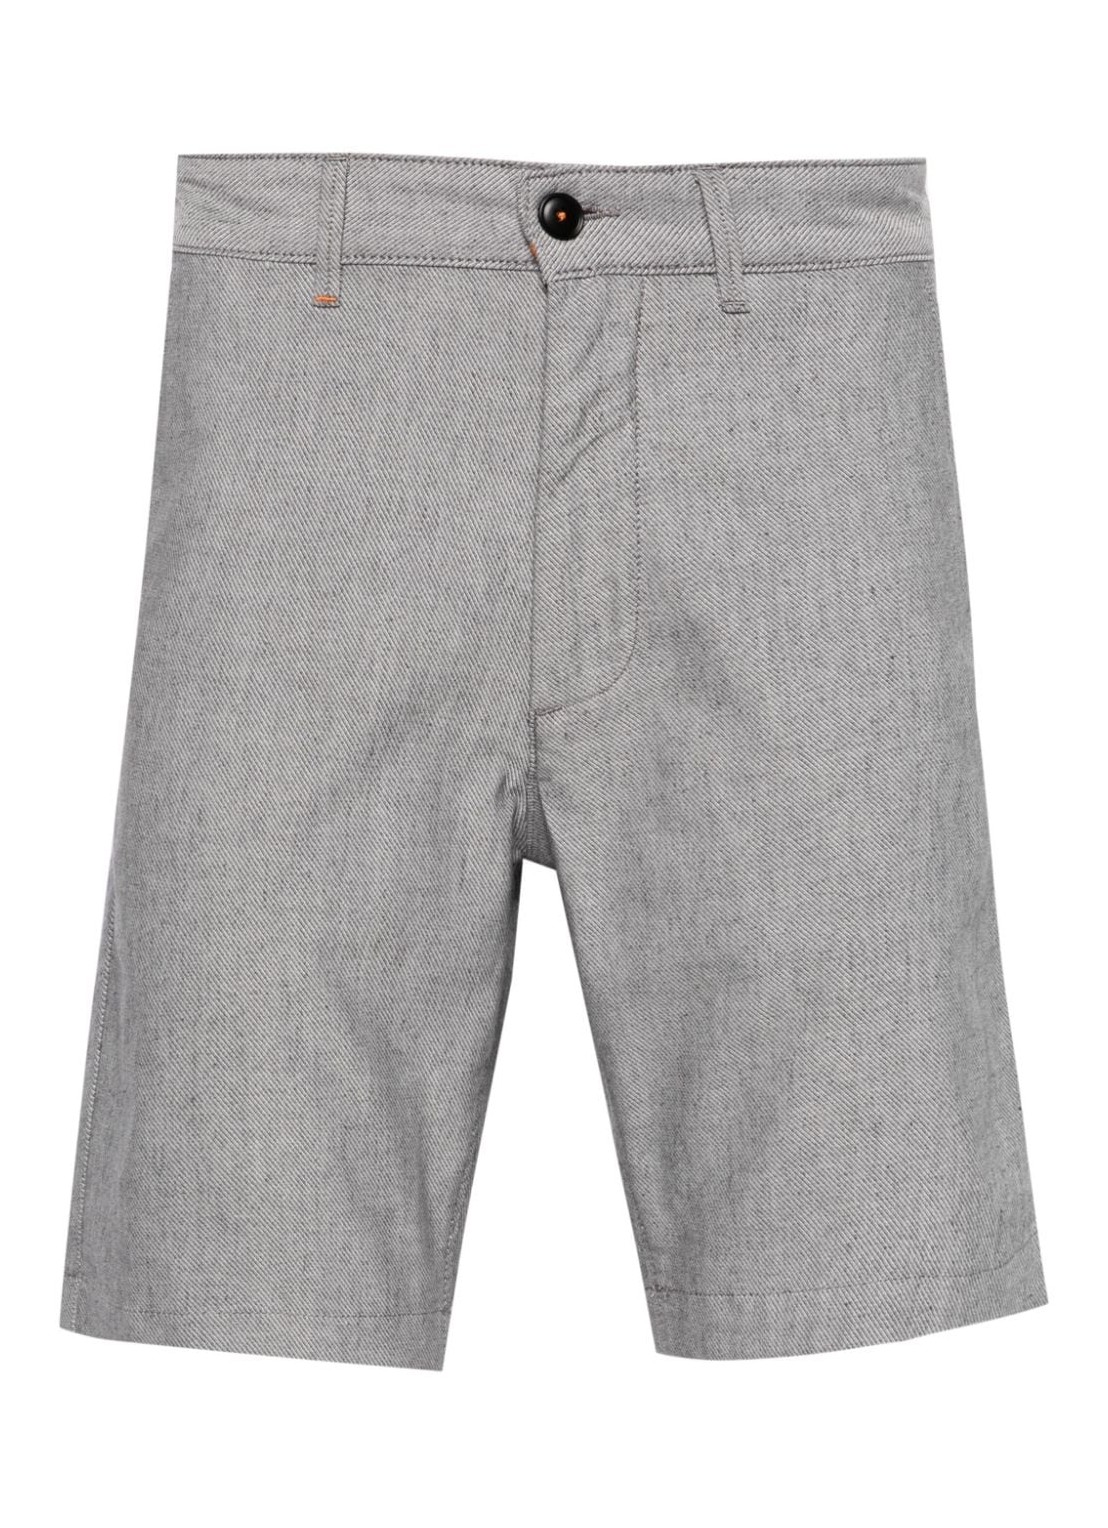 Pantalon corto boss short pant manchino-slim-shorts - 50513017 415 talla 32
 